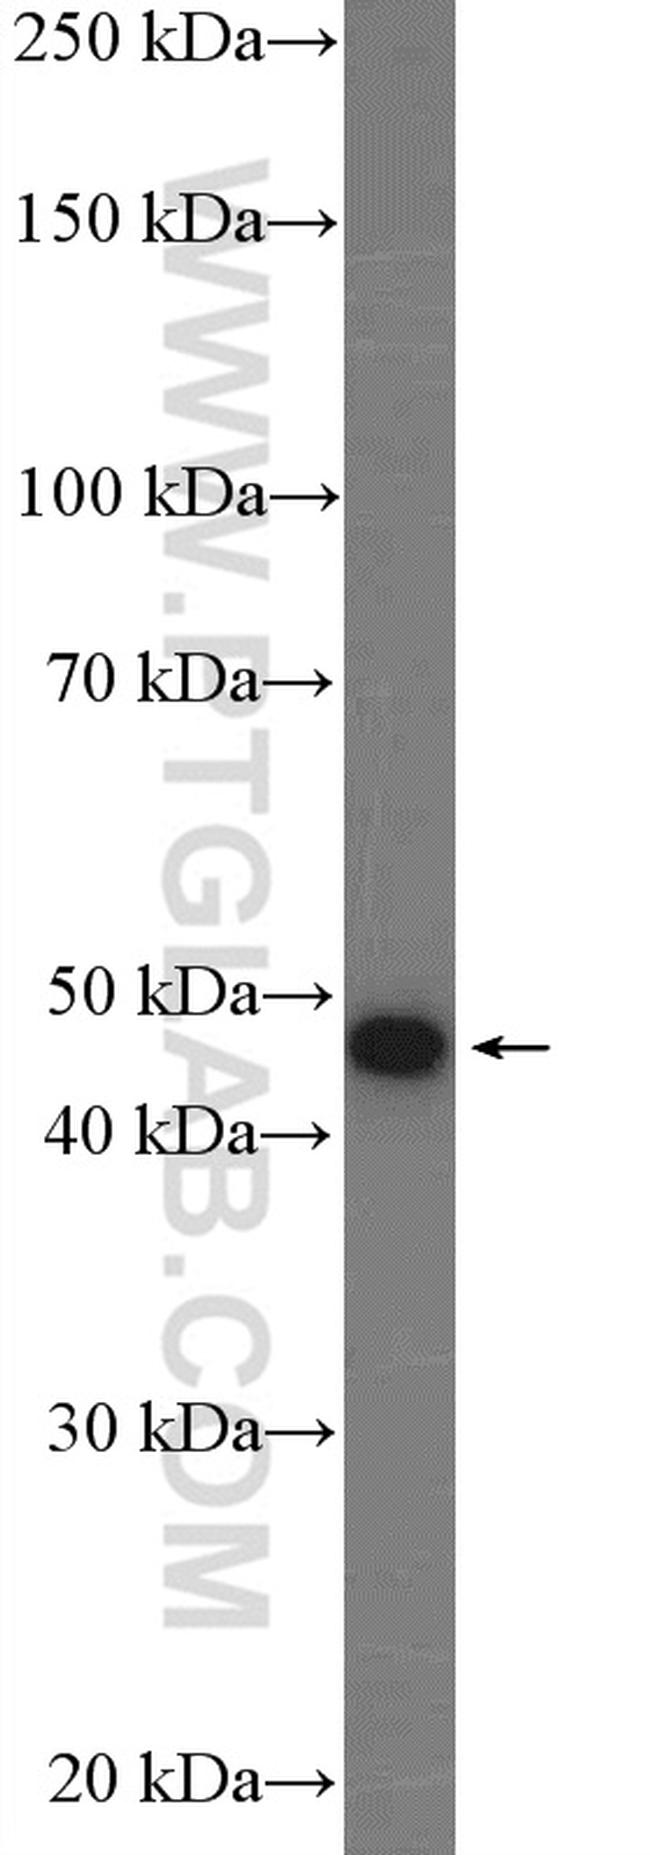 Cyclin E1 Antibody in Western Blot (WB)